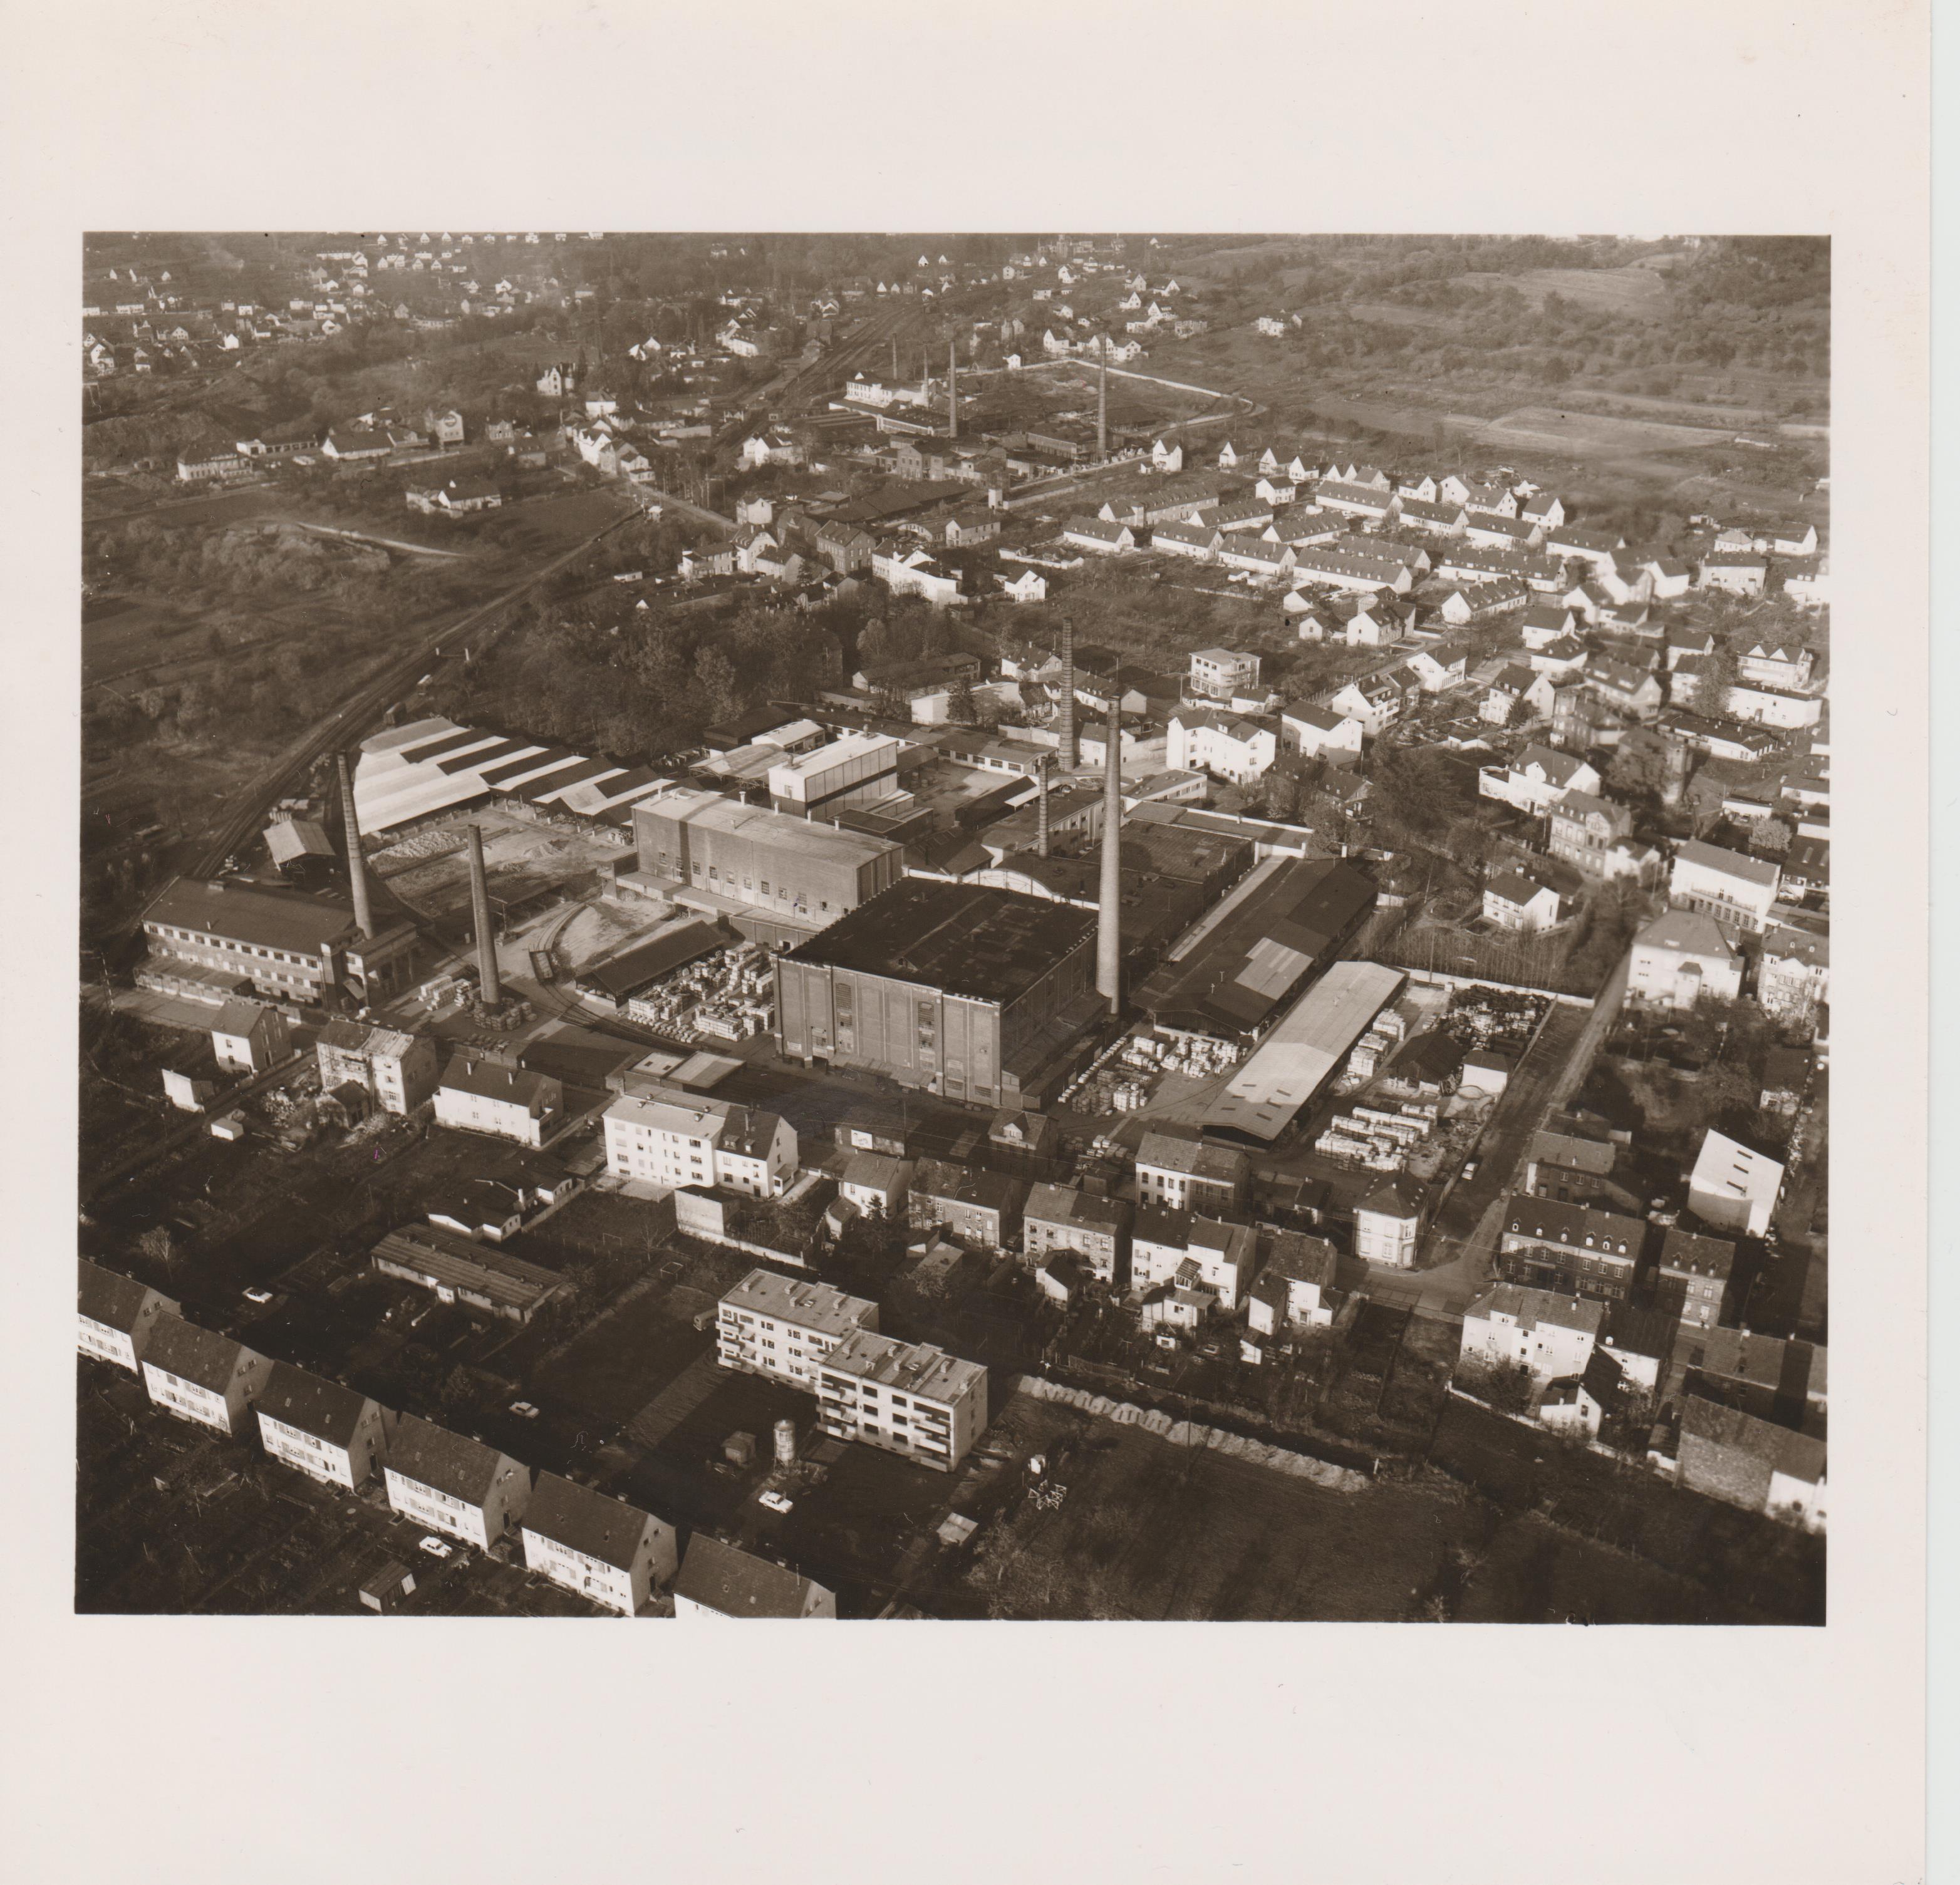 Luftaufnahme "Didier-Werke" Bendorf 1964 (REM CC BY-NC-SA)